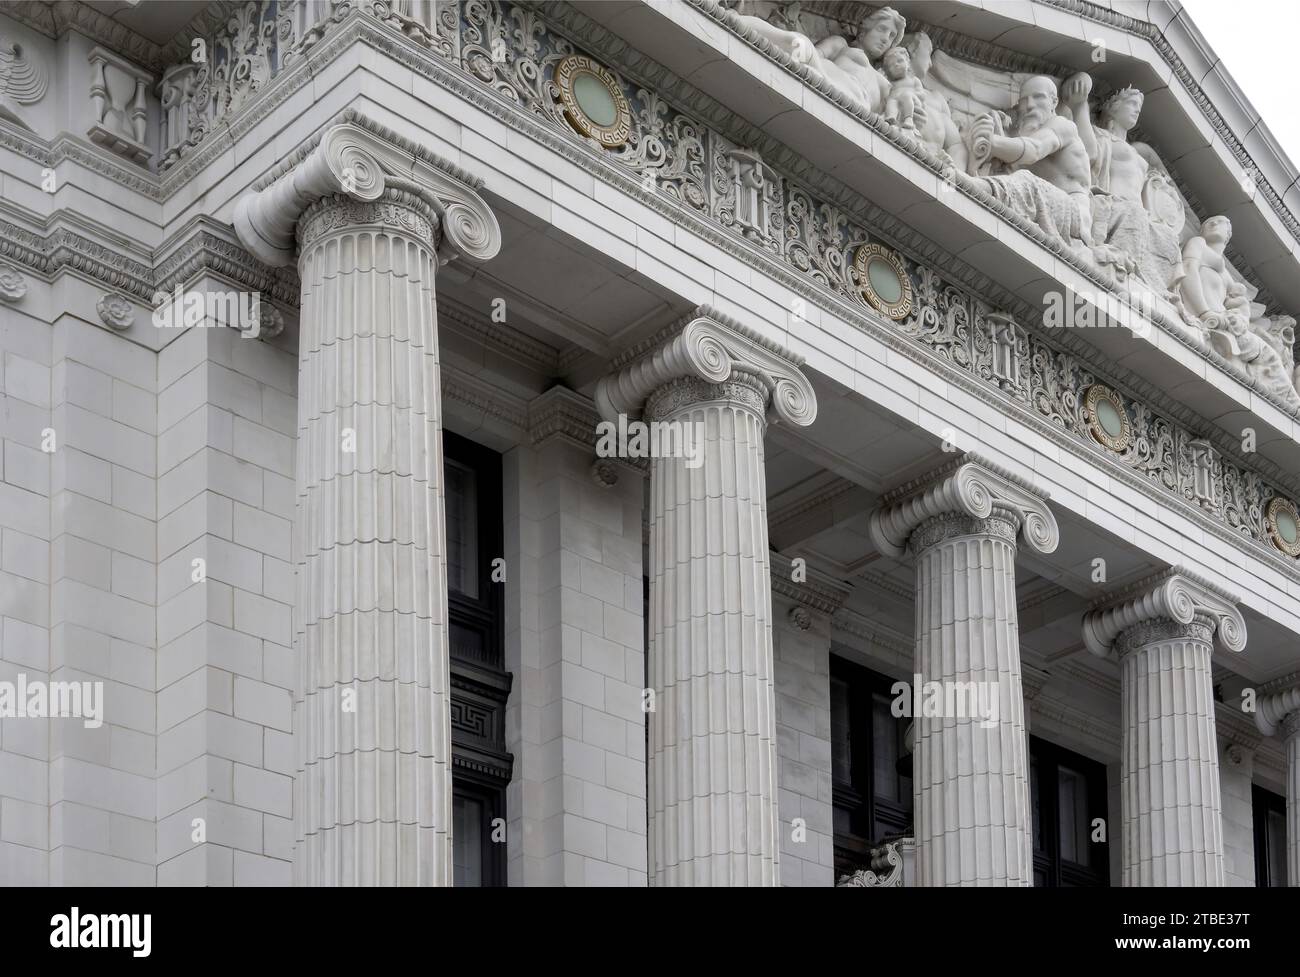 Neo-classical columns with Corinthian scrolls Stock Photo